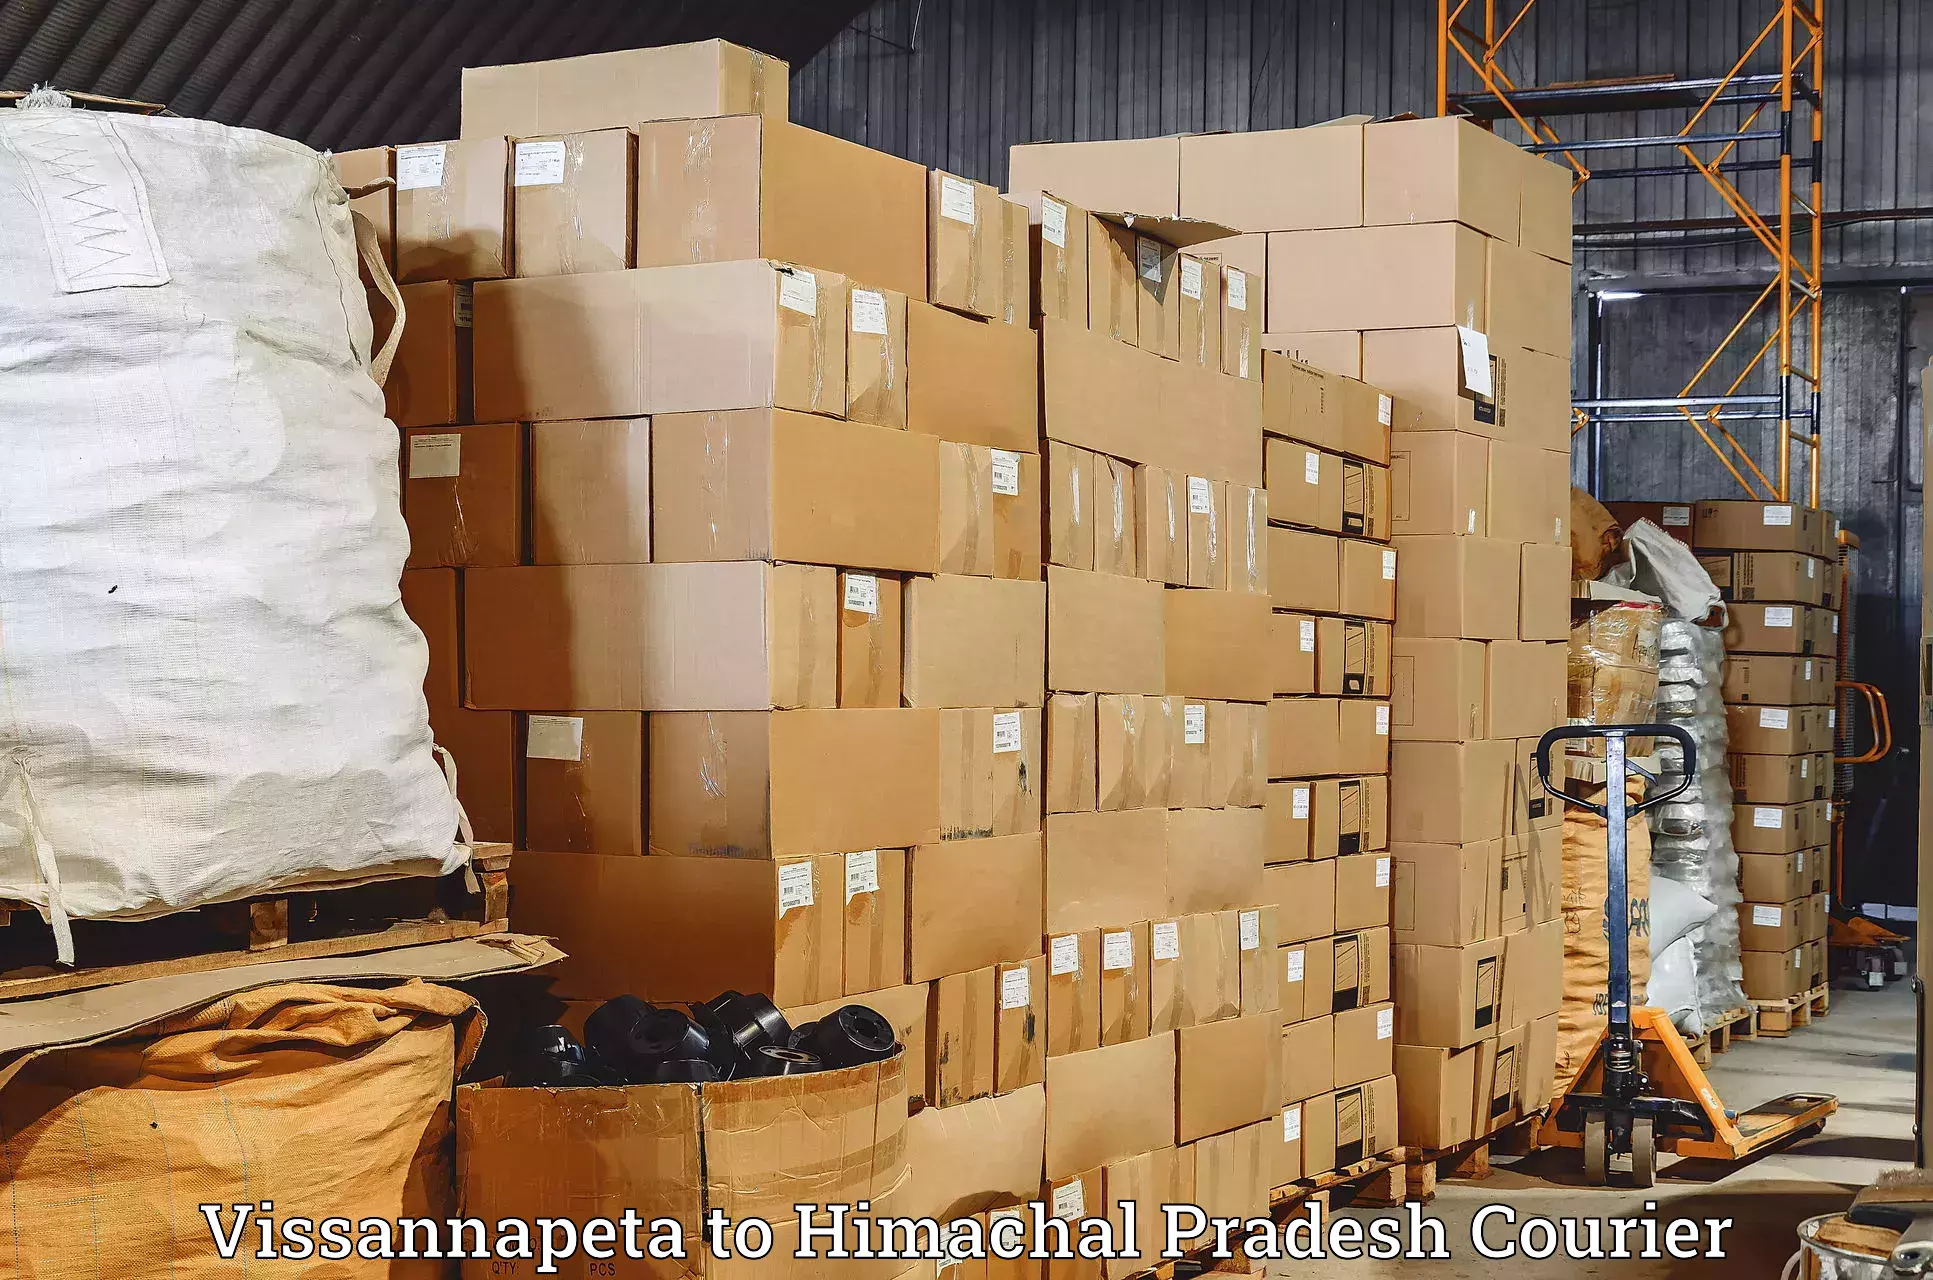 Sustainable delivery practices Vissannapeta to Kotkhai